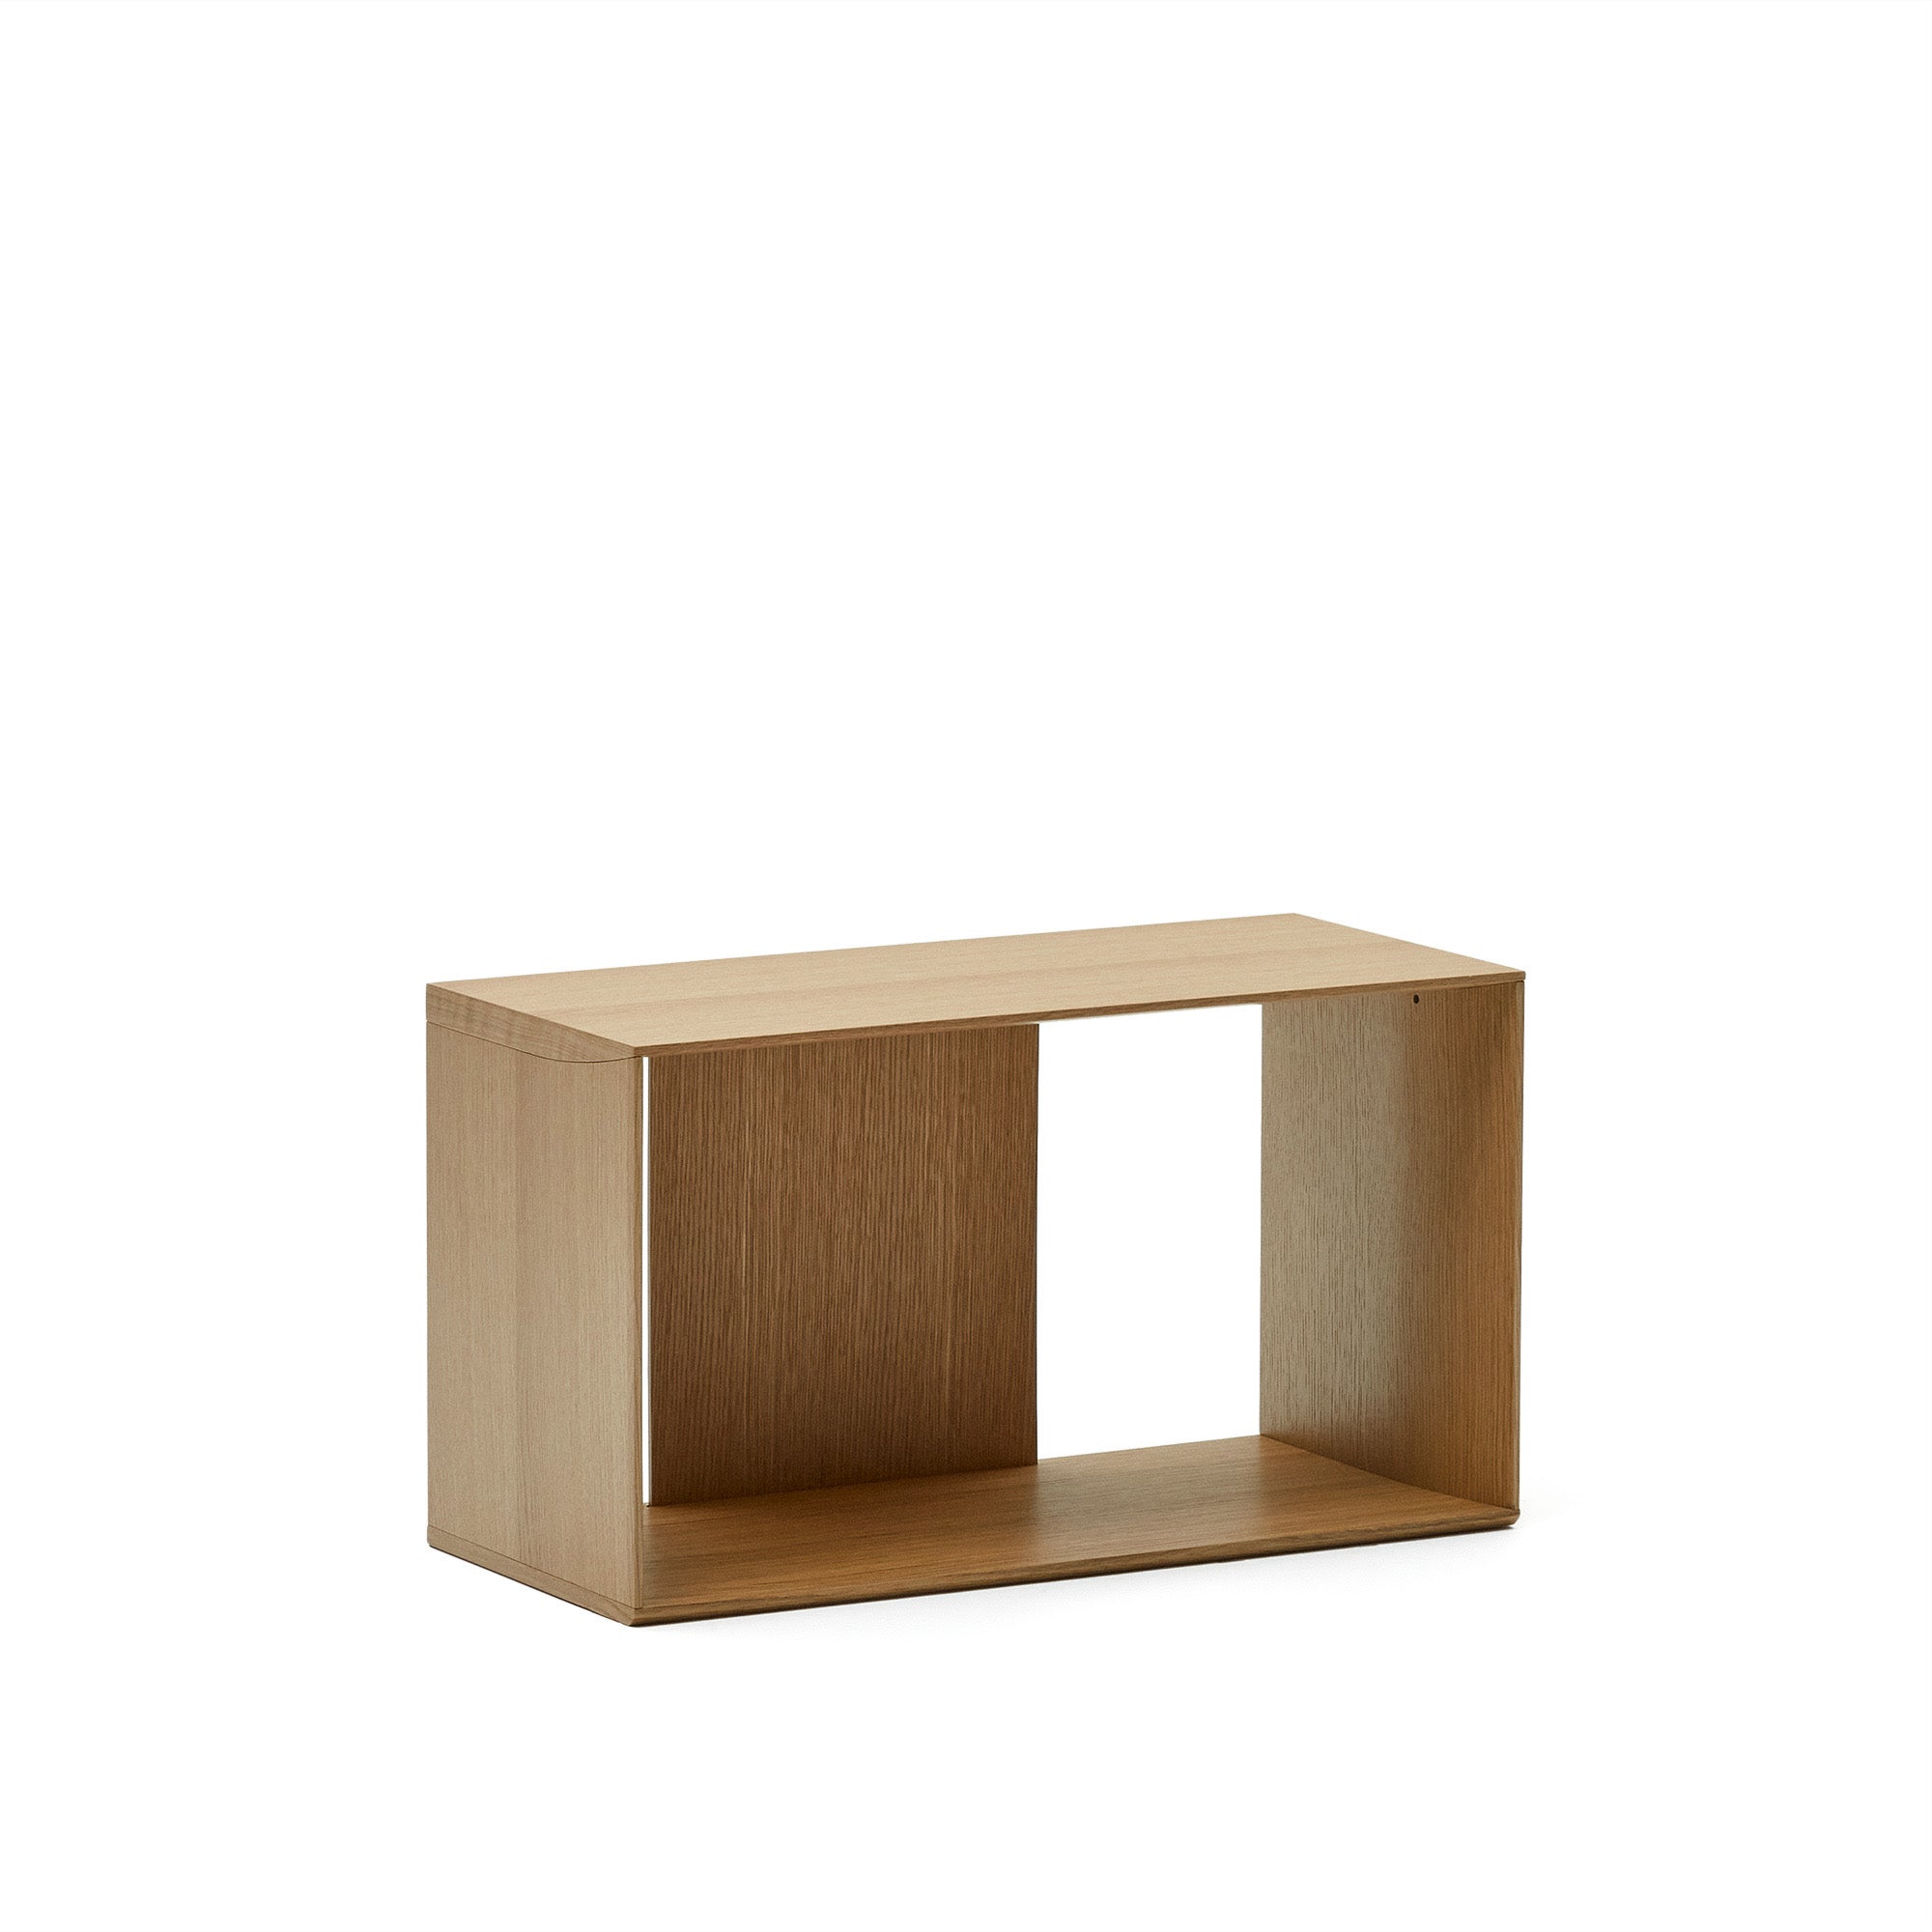 Litto medium shelf module in oak veneer, 67 x 38 cm